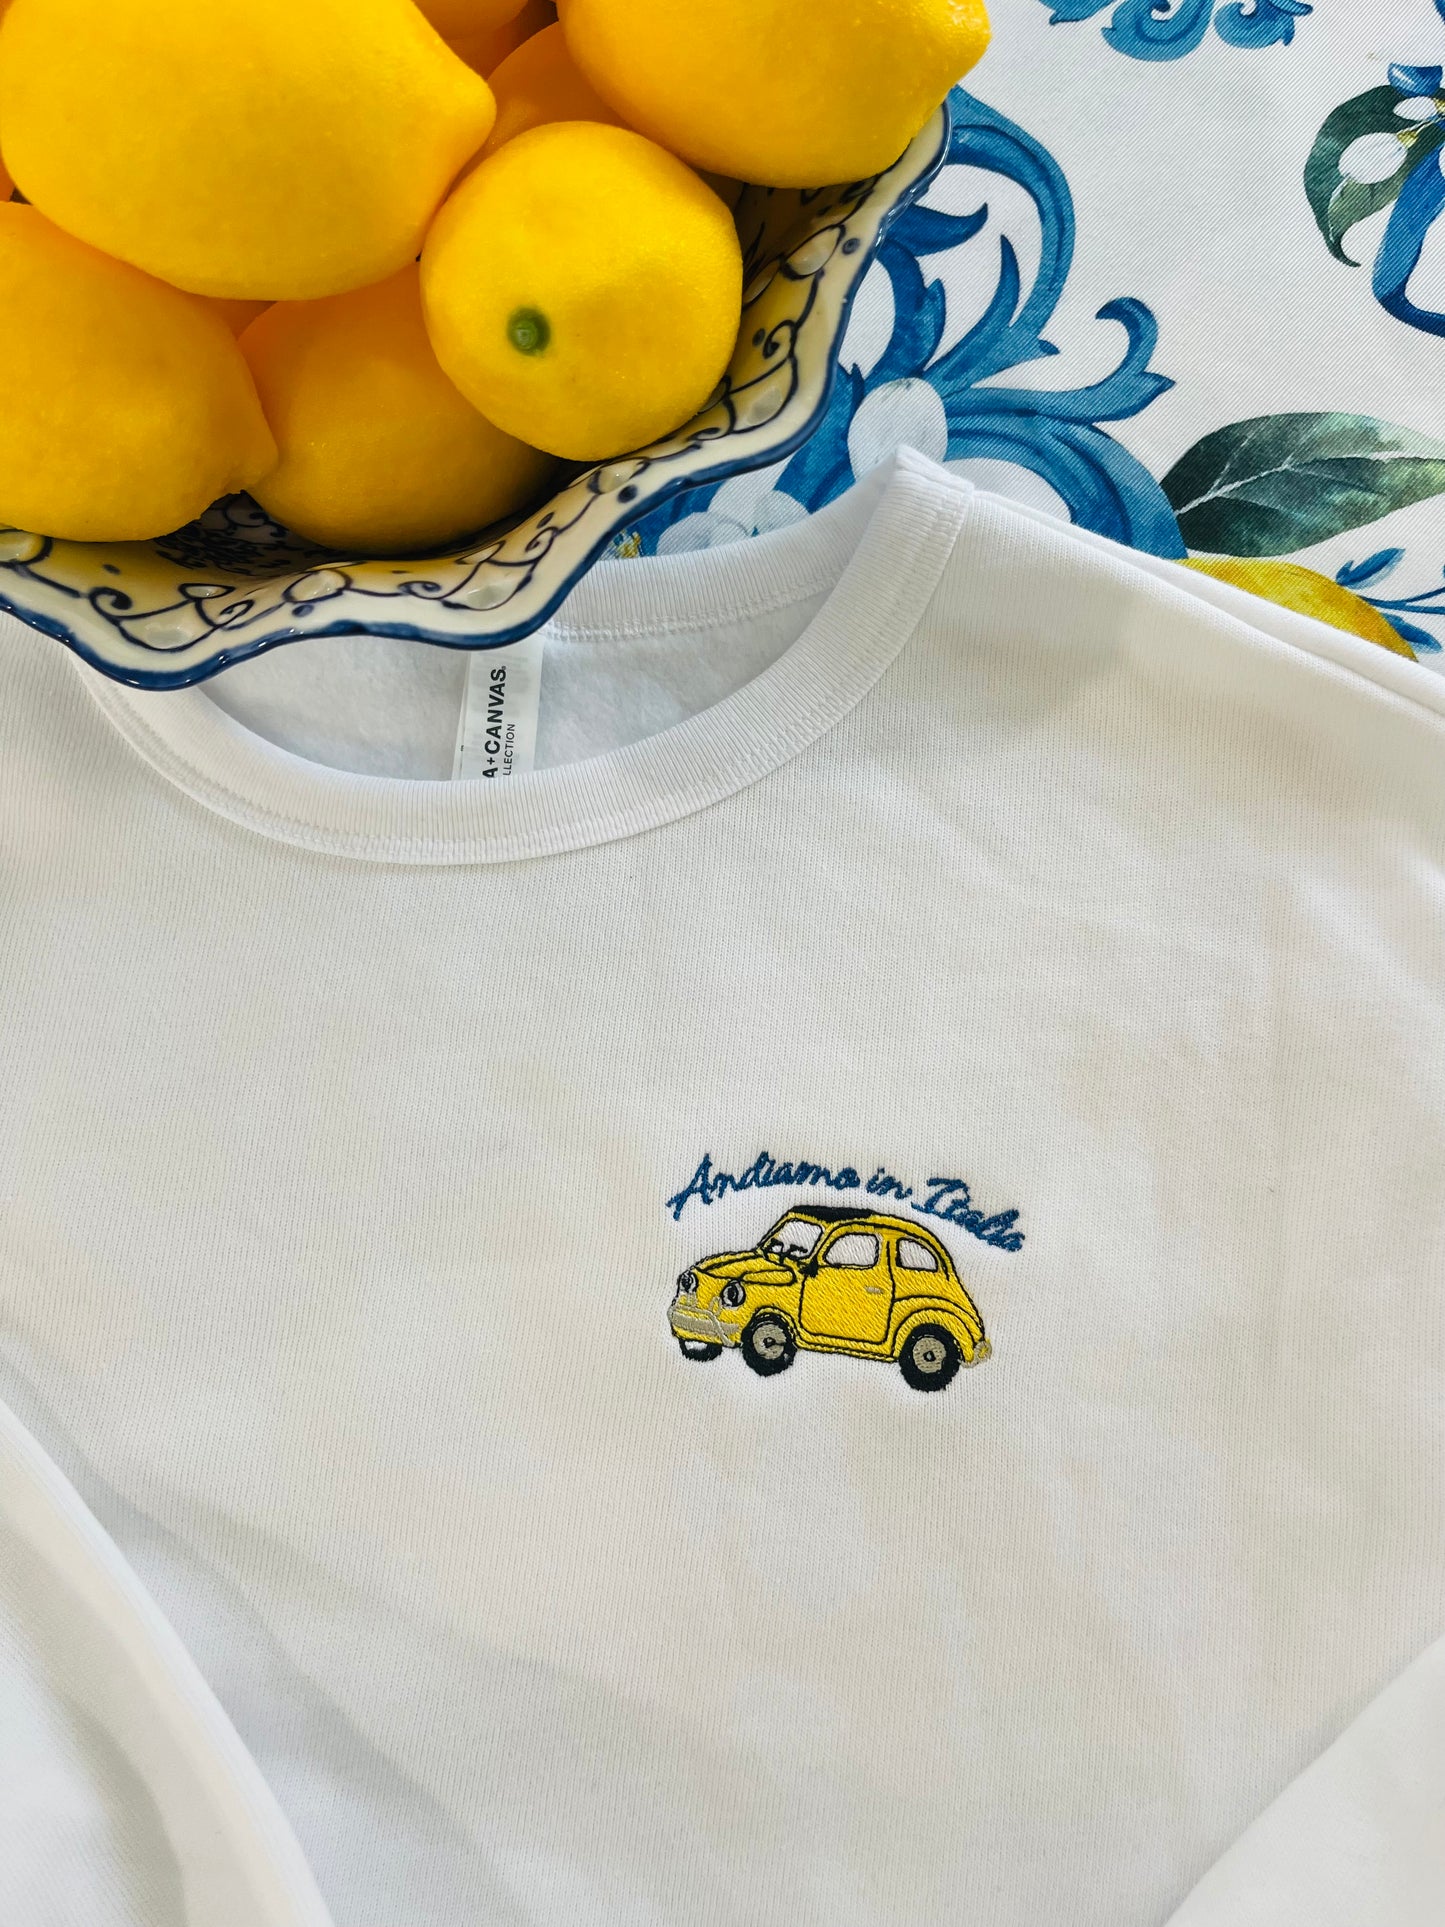 Andiamo in Italia Embroidered Sweatshirt